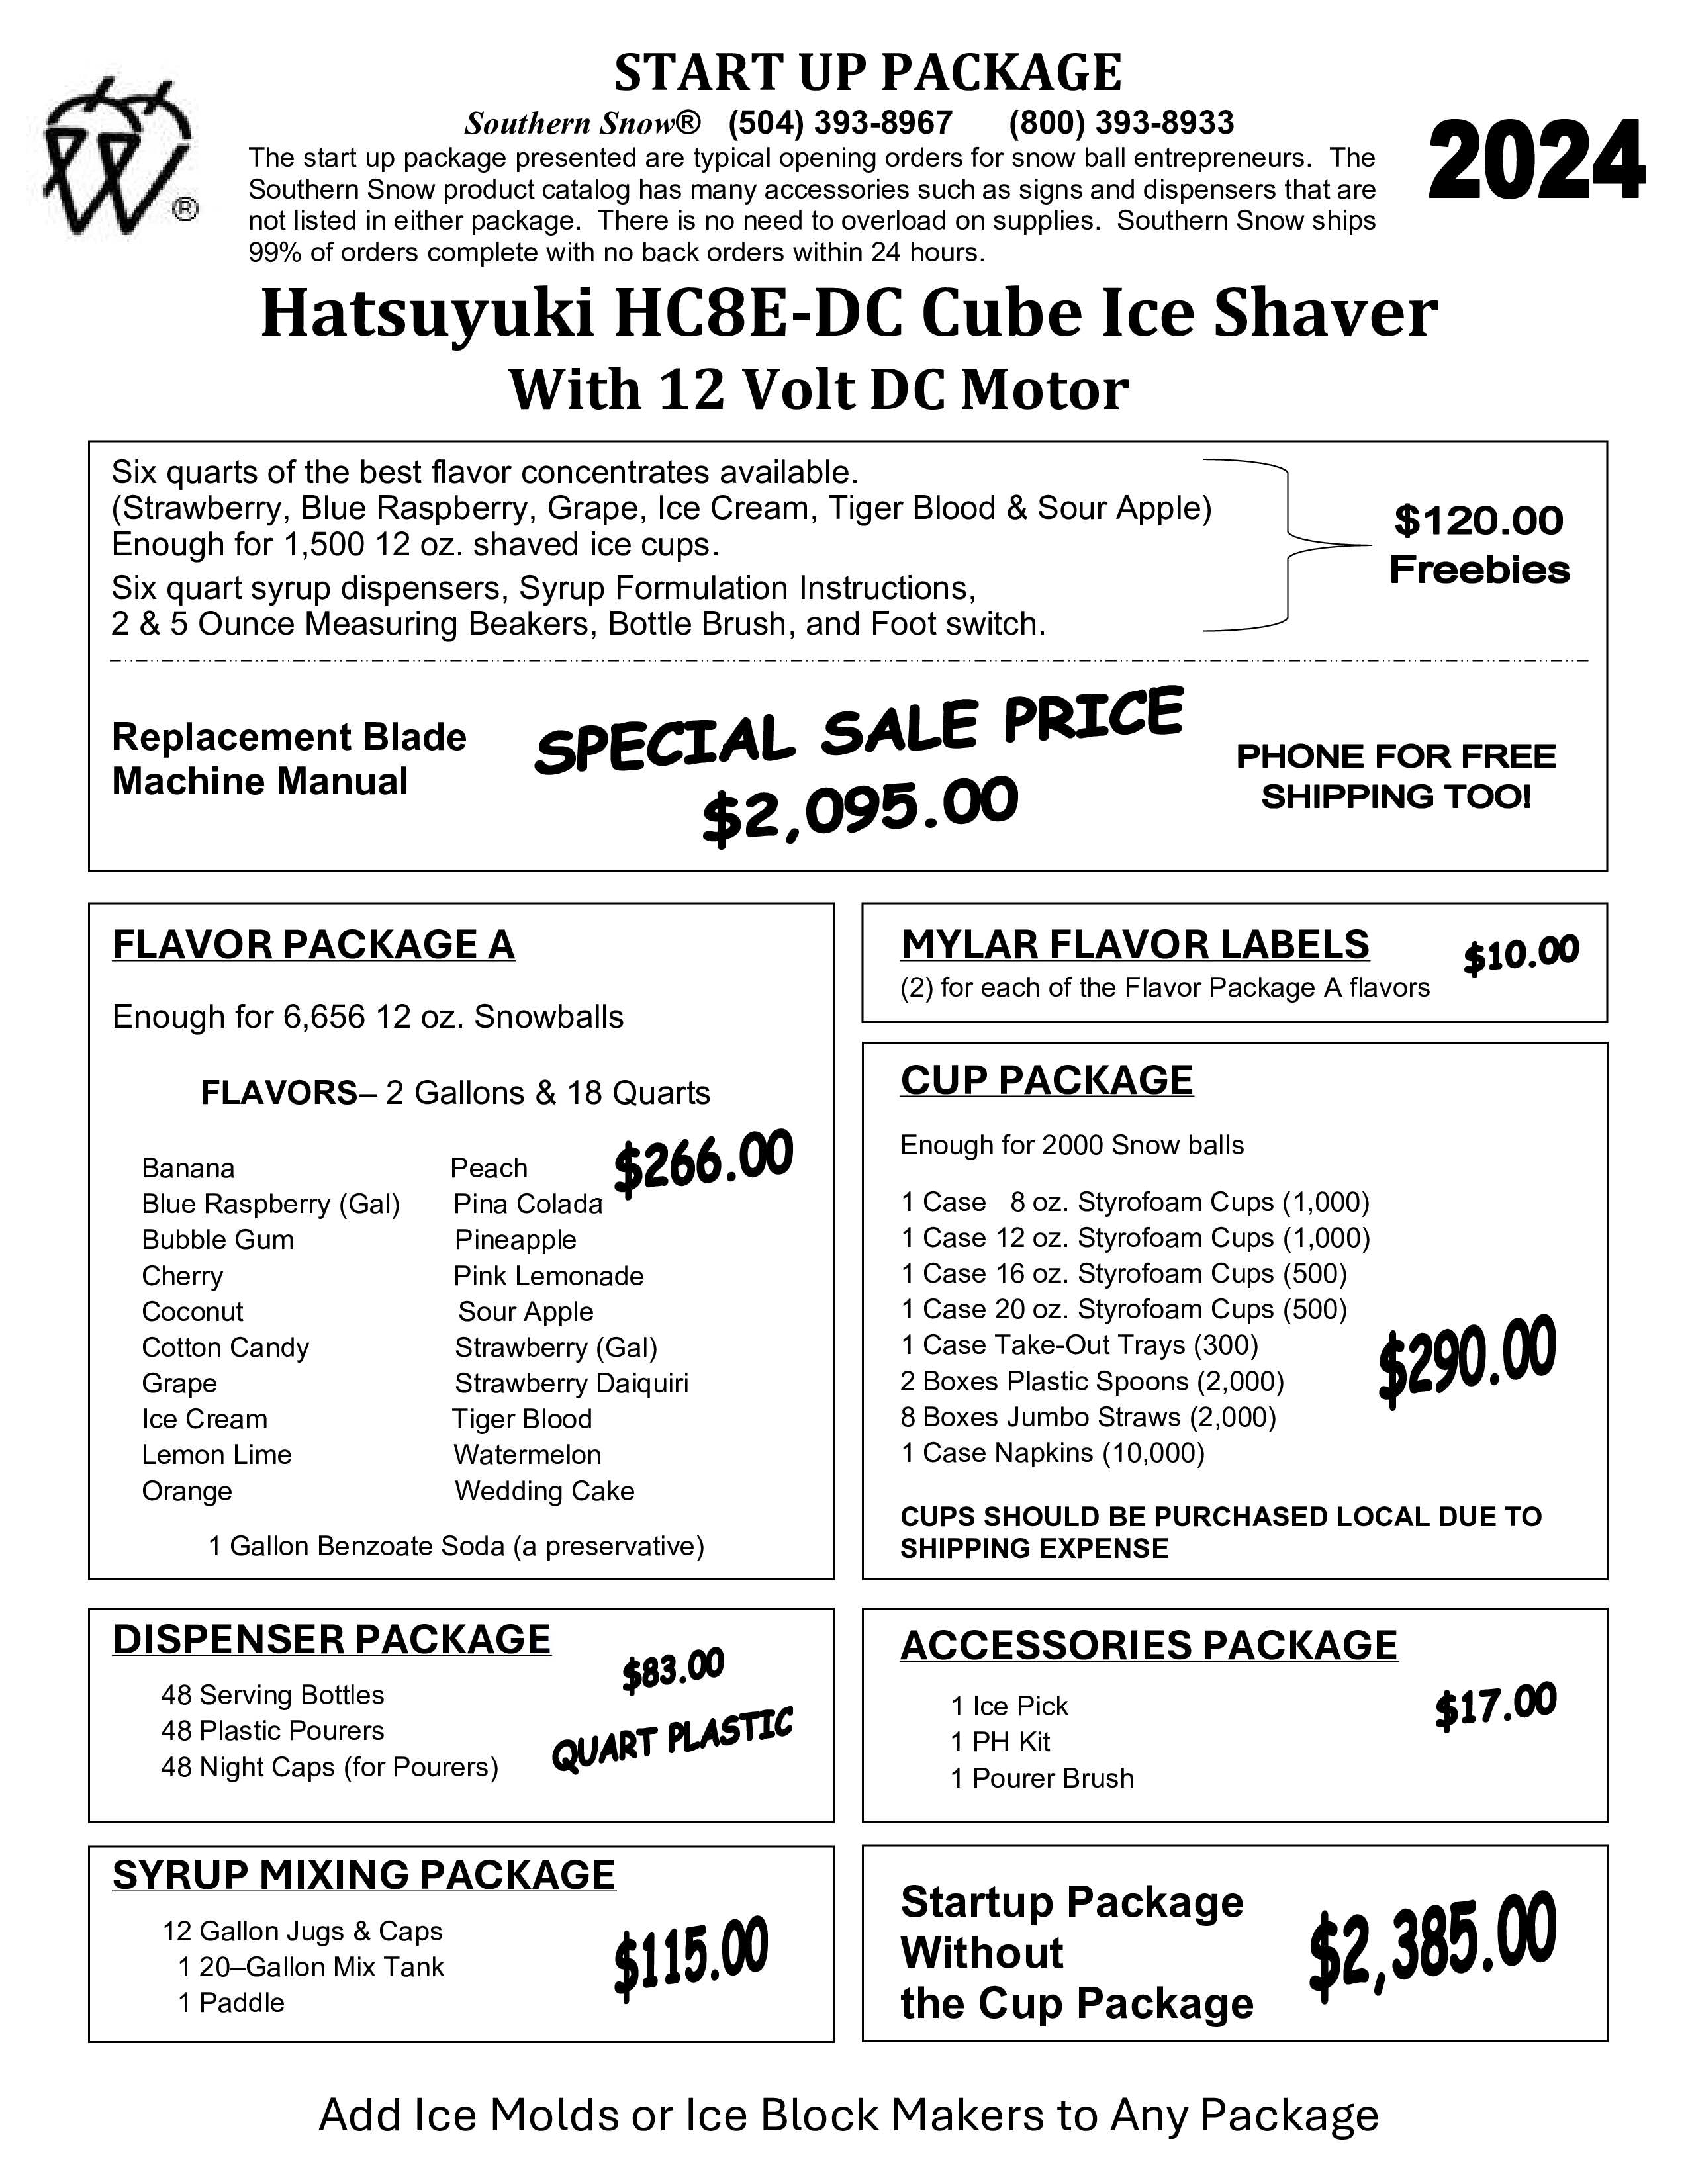 Hatsuyuki HC8E-DC Cube Ice Shaver Start Up